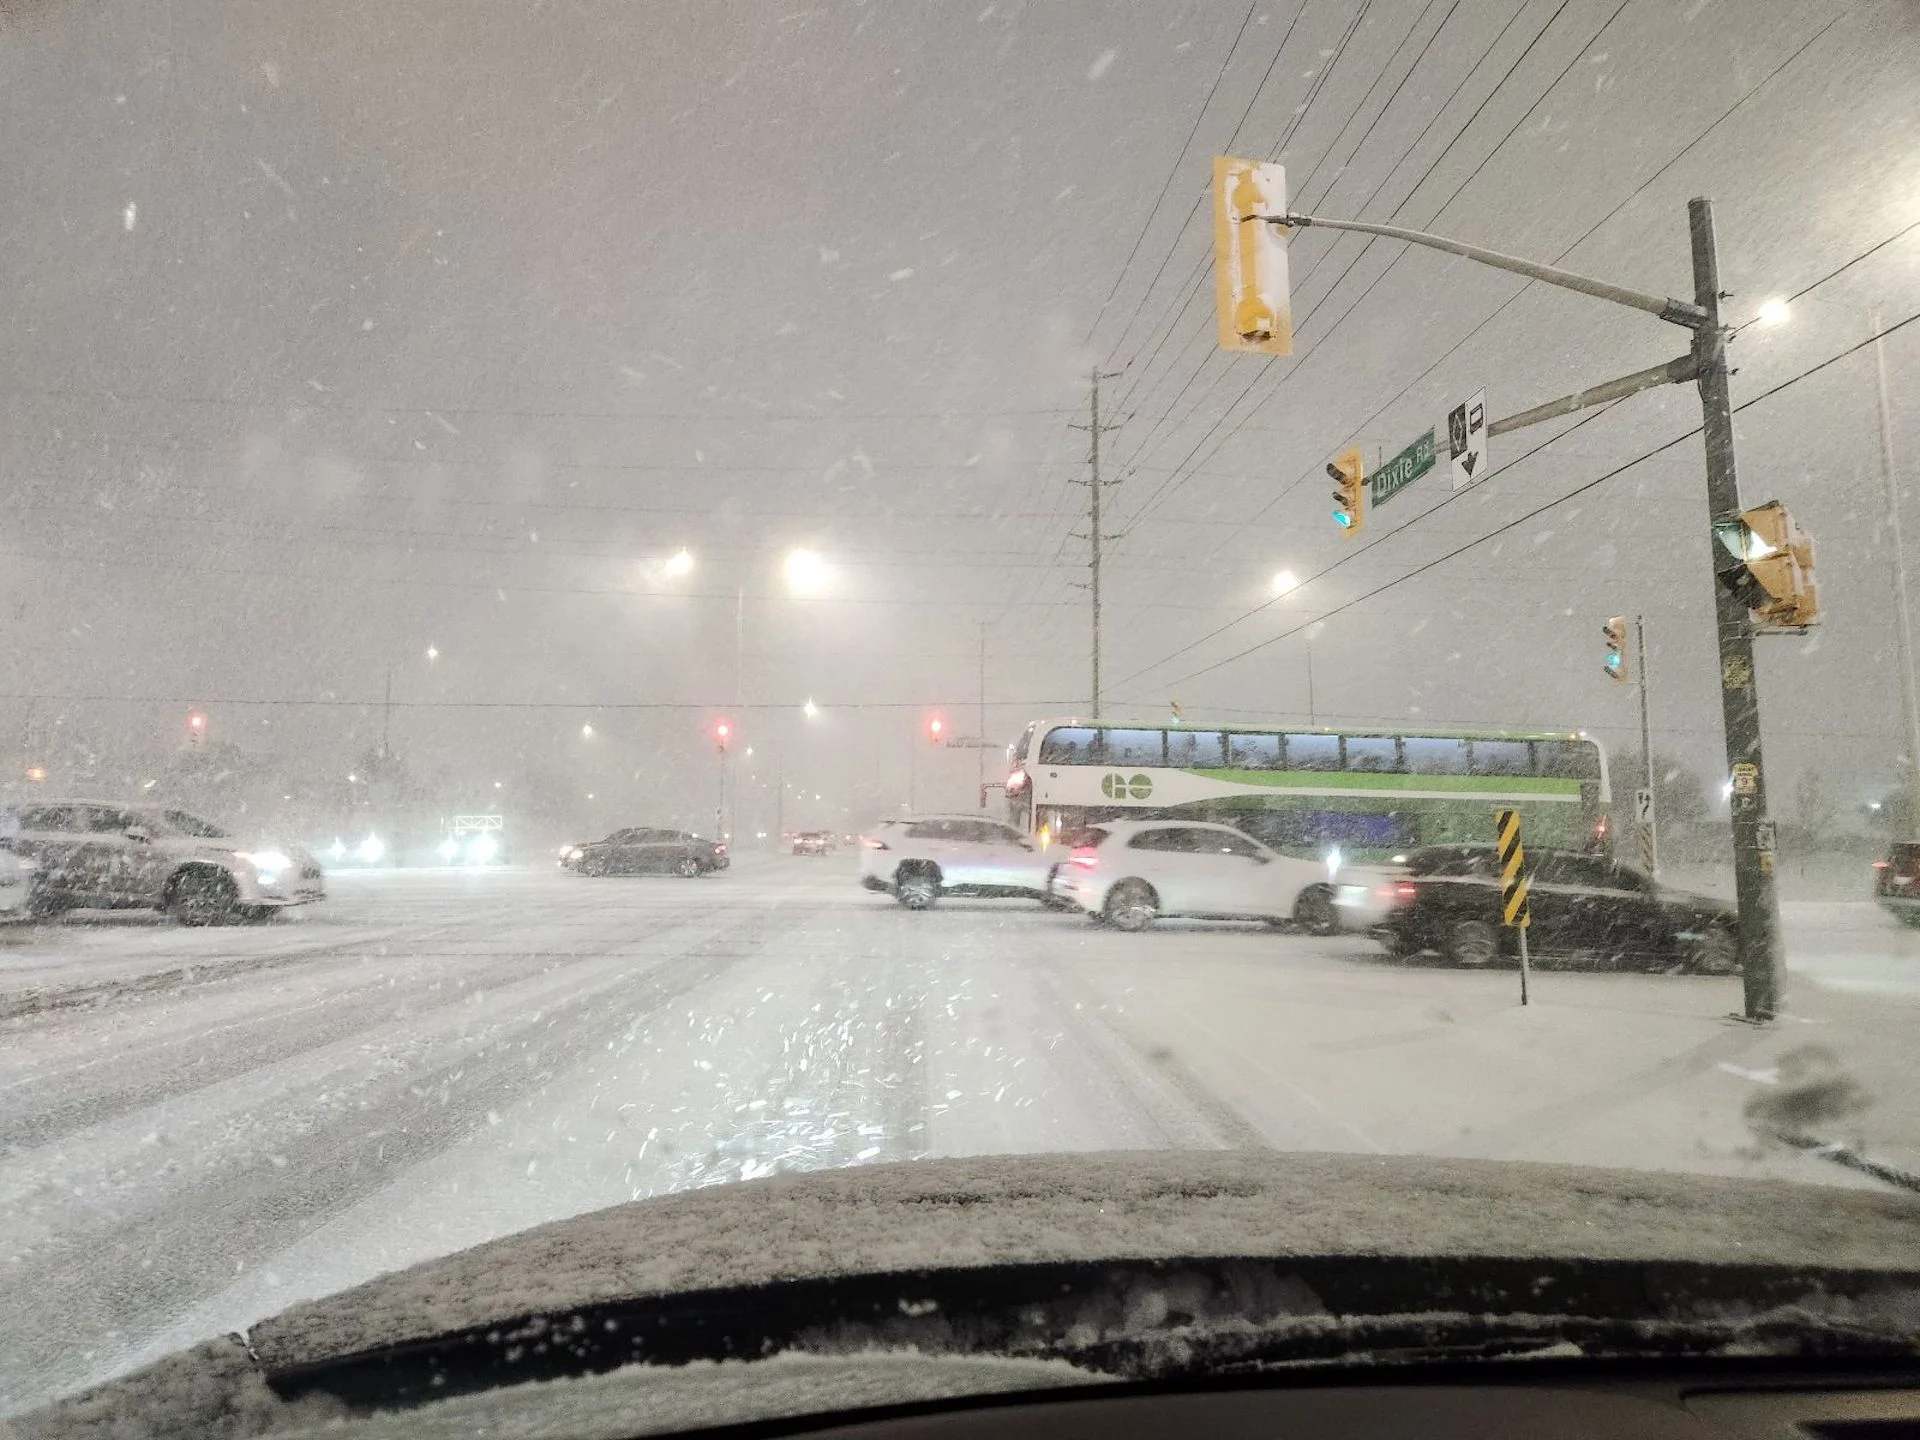 PHOTOS: Wild Ontario winter storm knocks out power, thundersnow reported